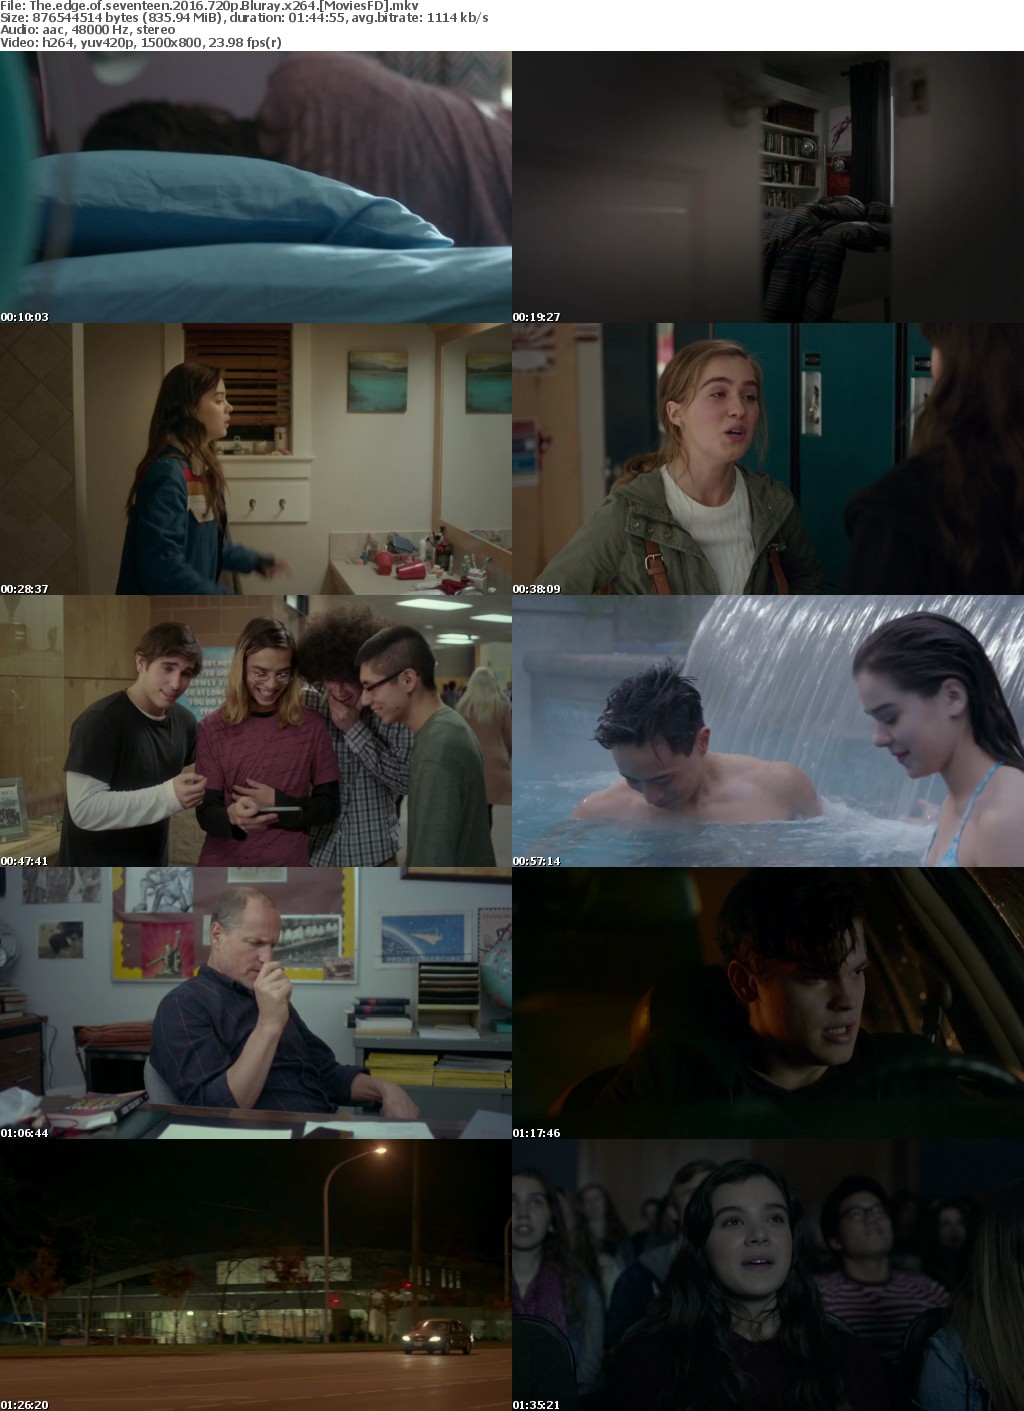 The Edge of Seventeen (2016) 720p BluRay x264 - MoviesFD